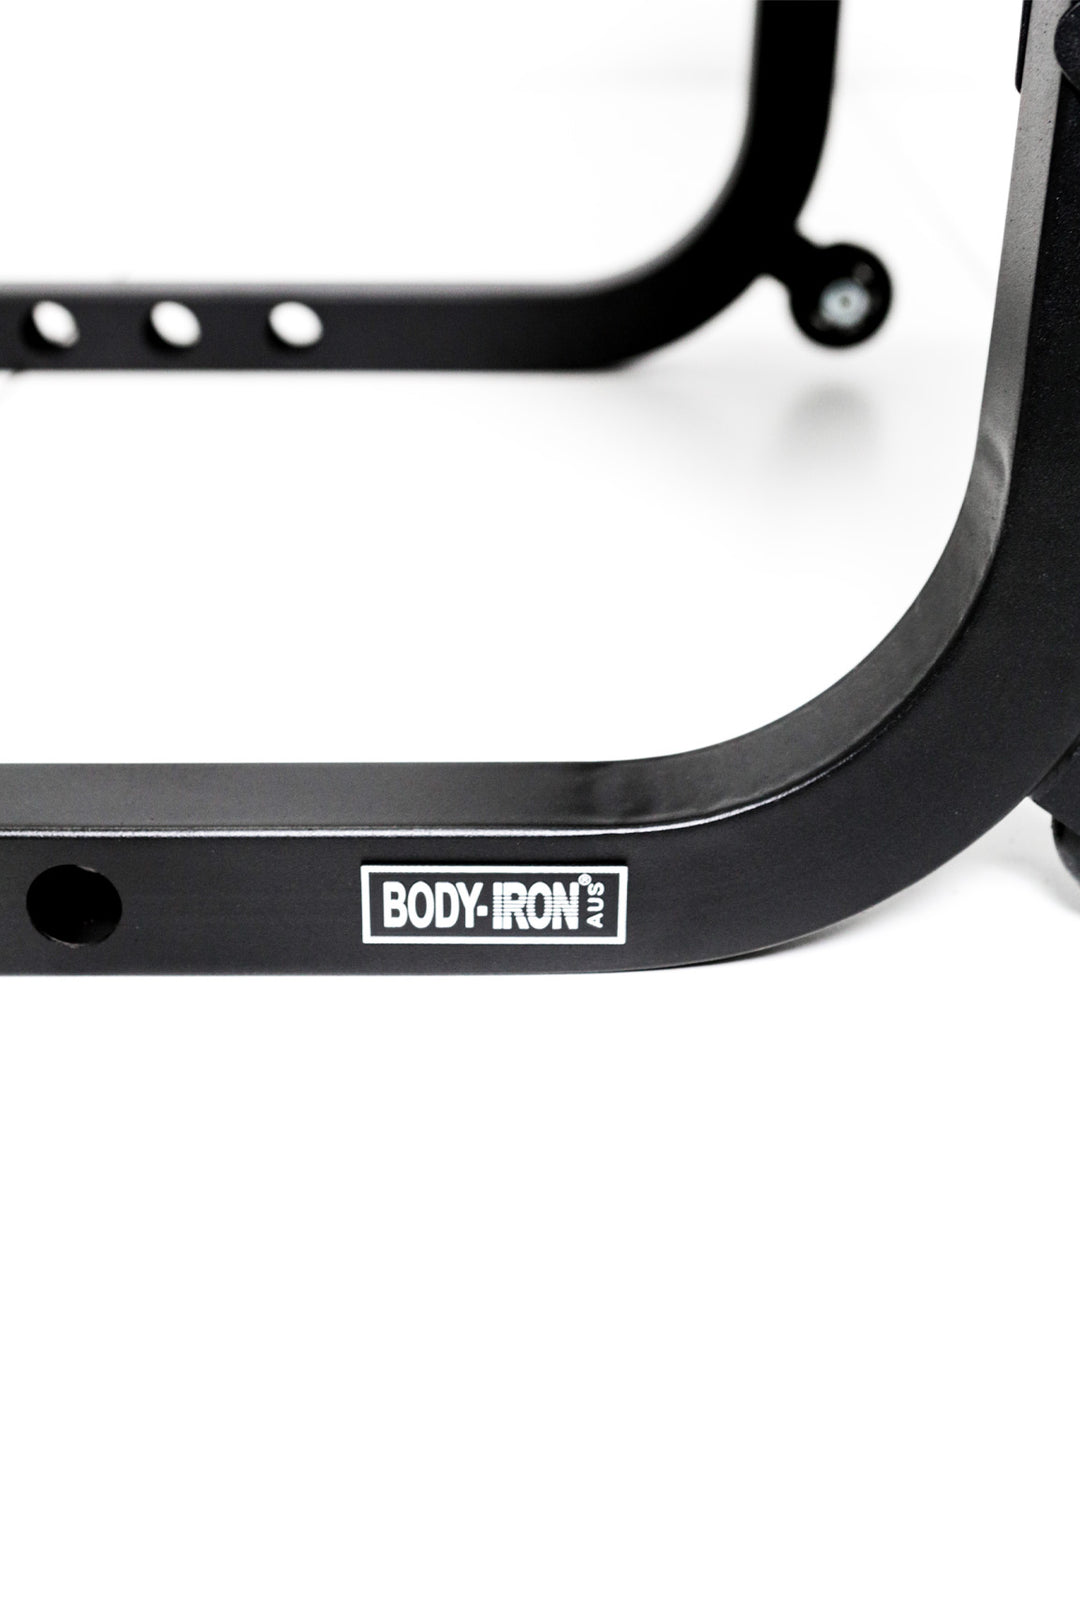 Body Iron branding on machine frame